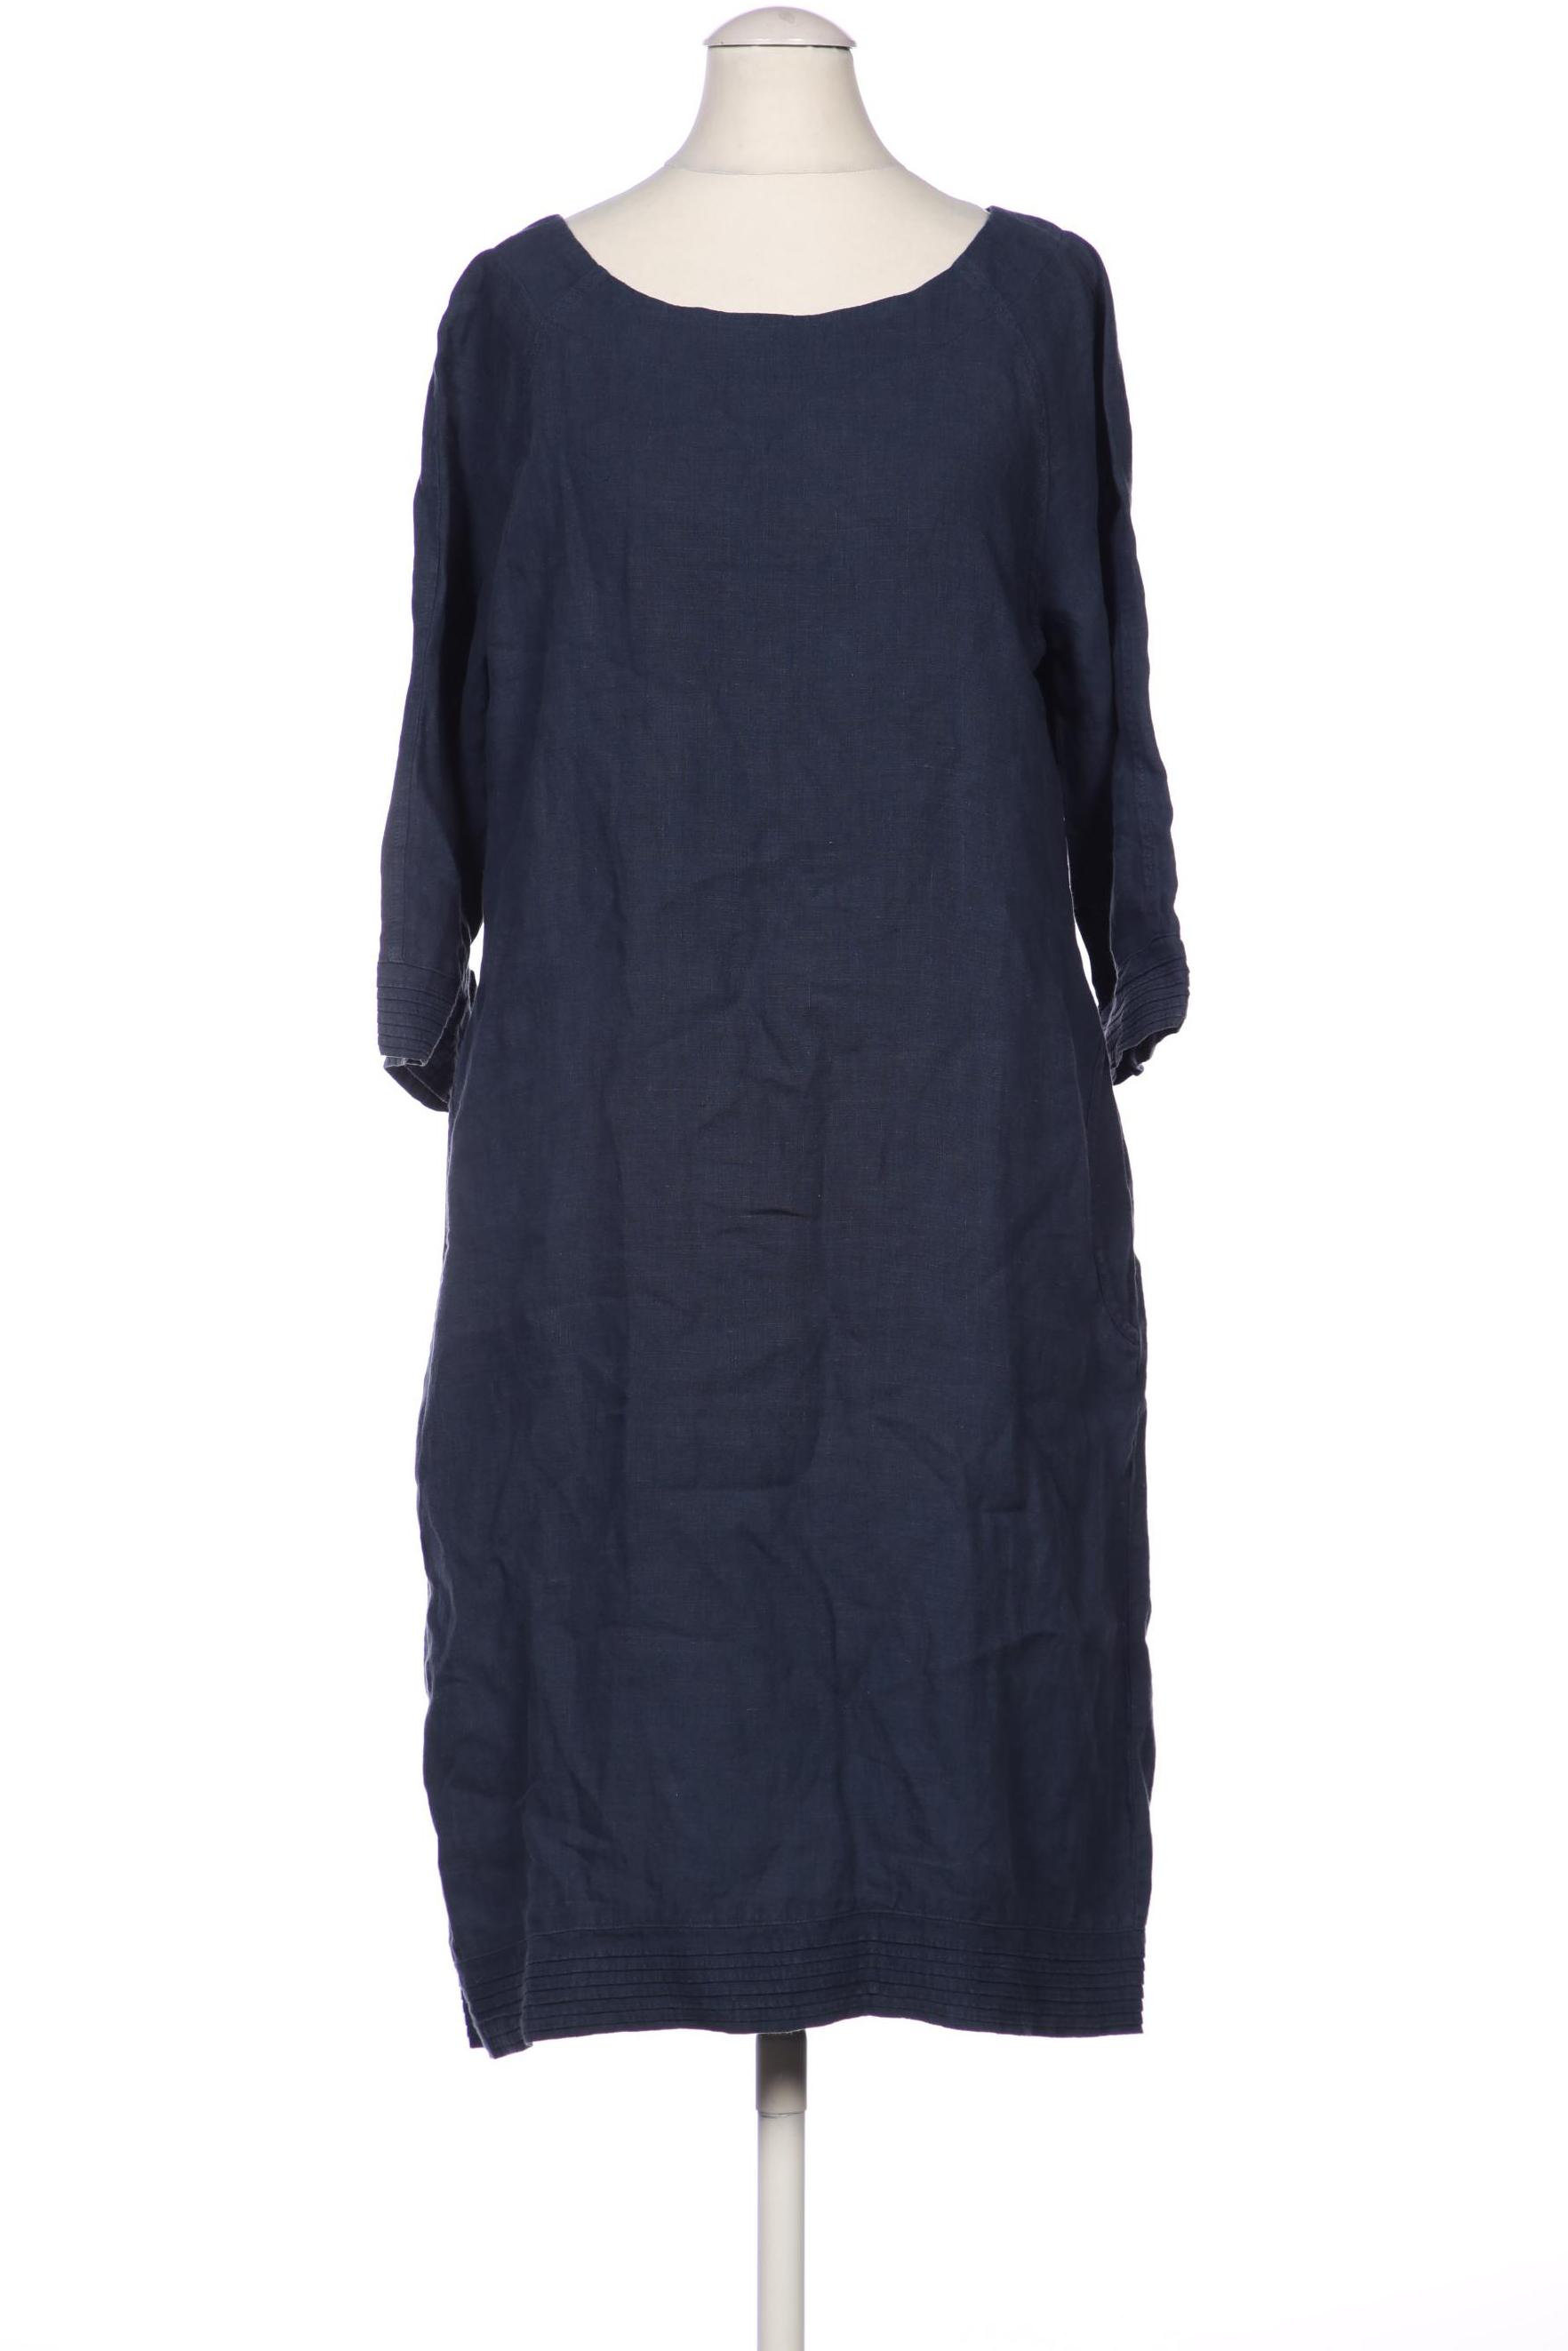 Maas Damen Kleid, marineblau, Gr. 36 von Maas